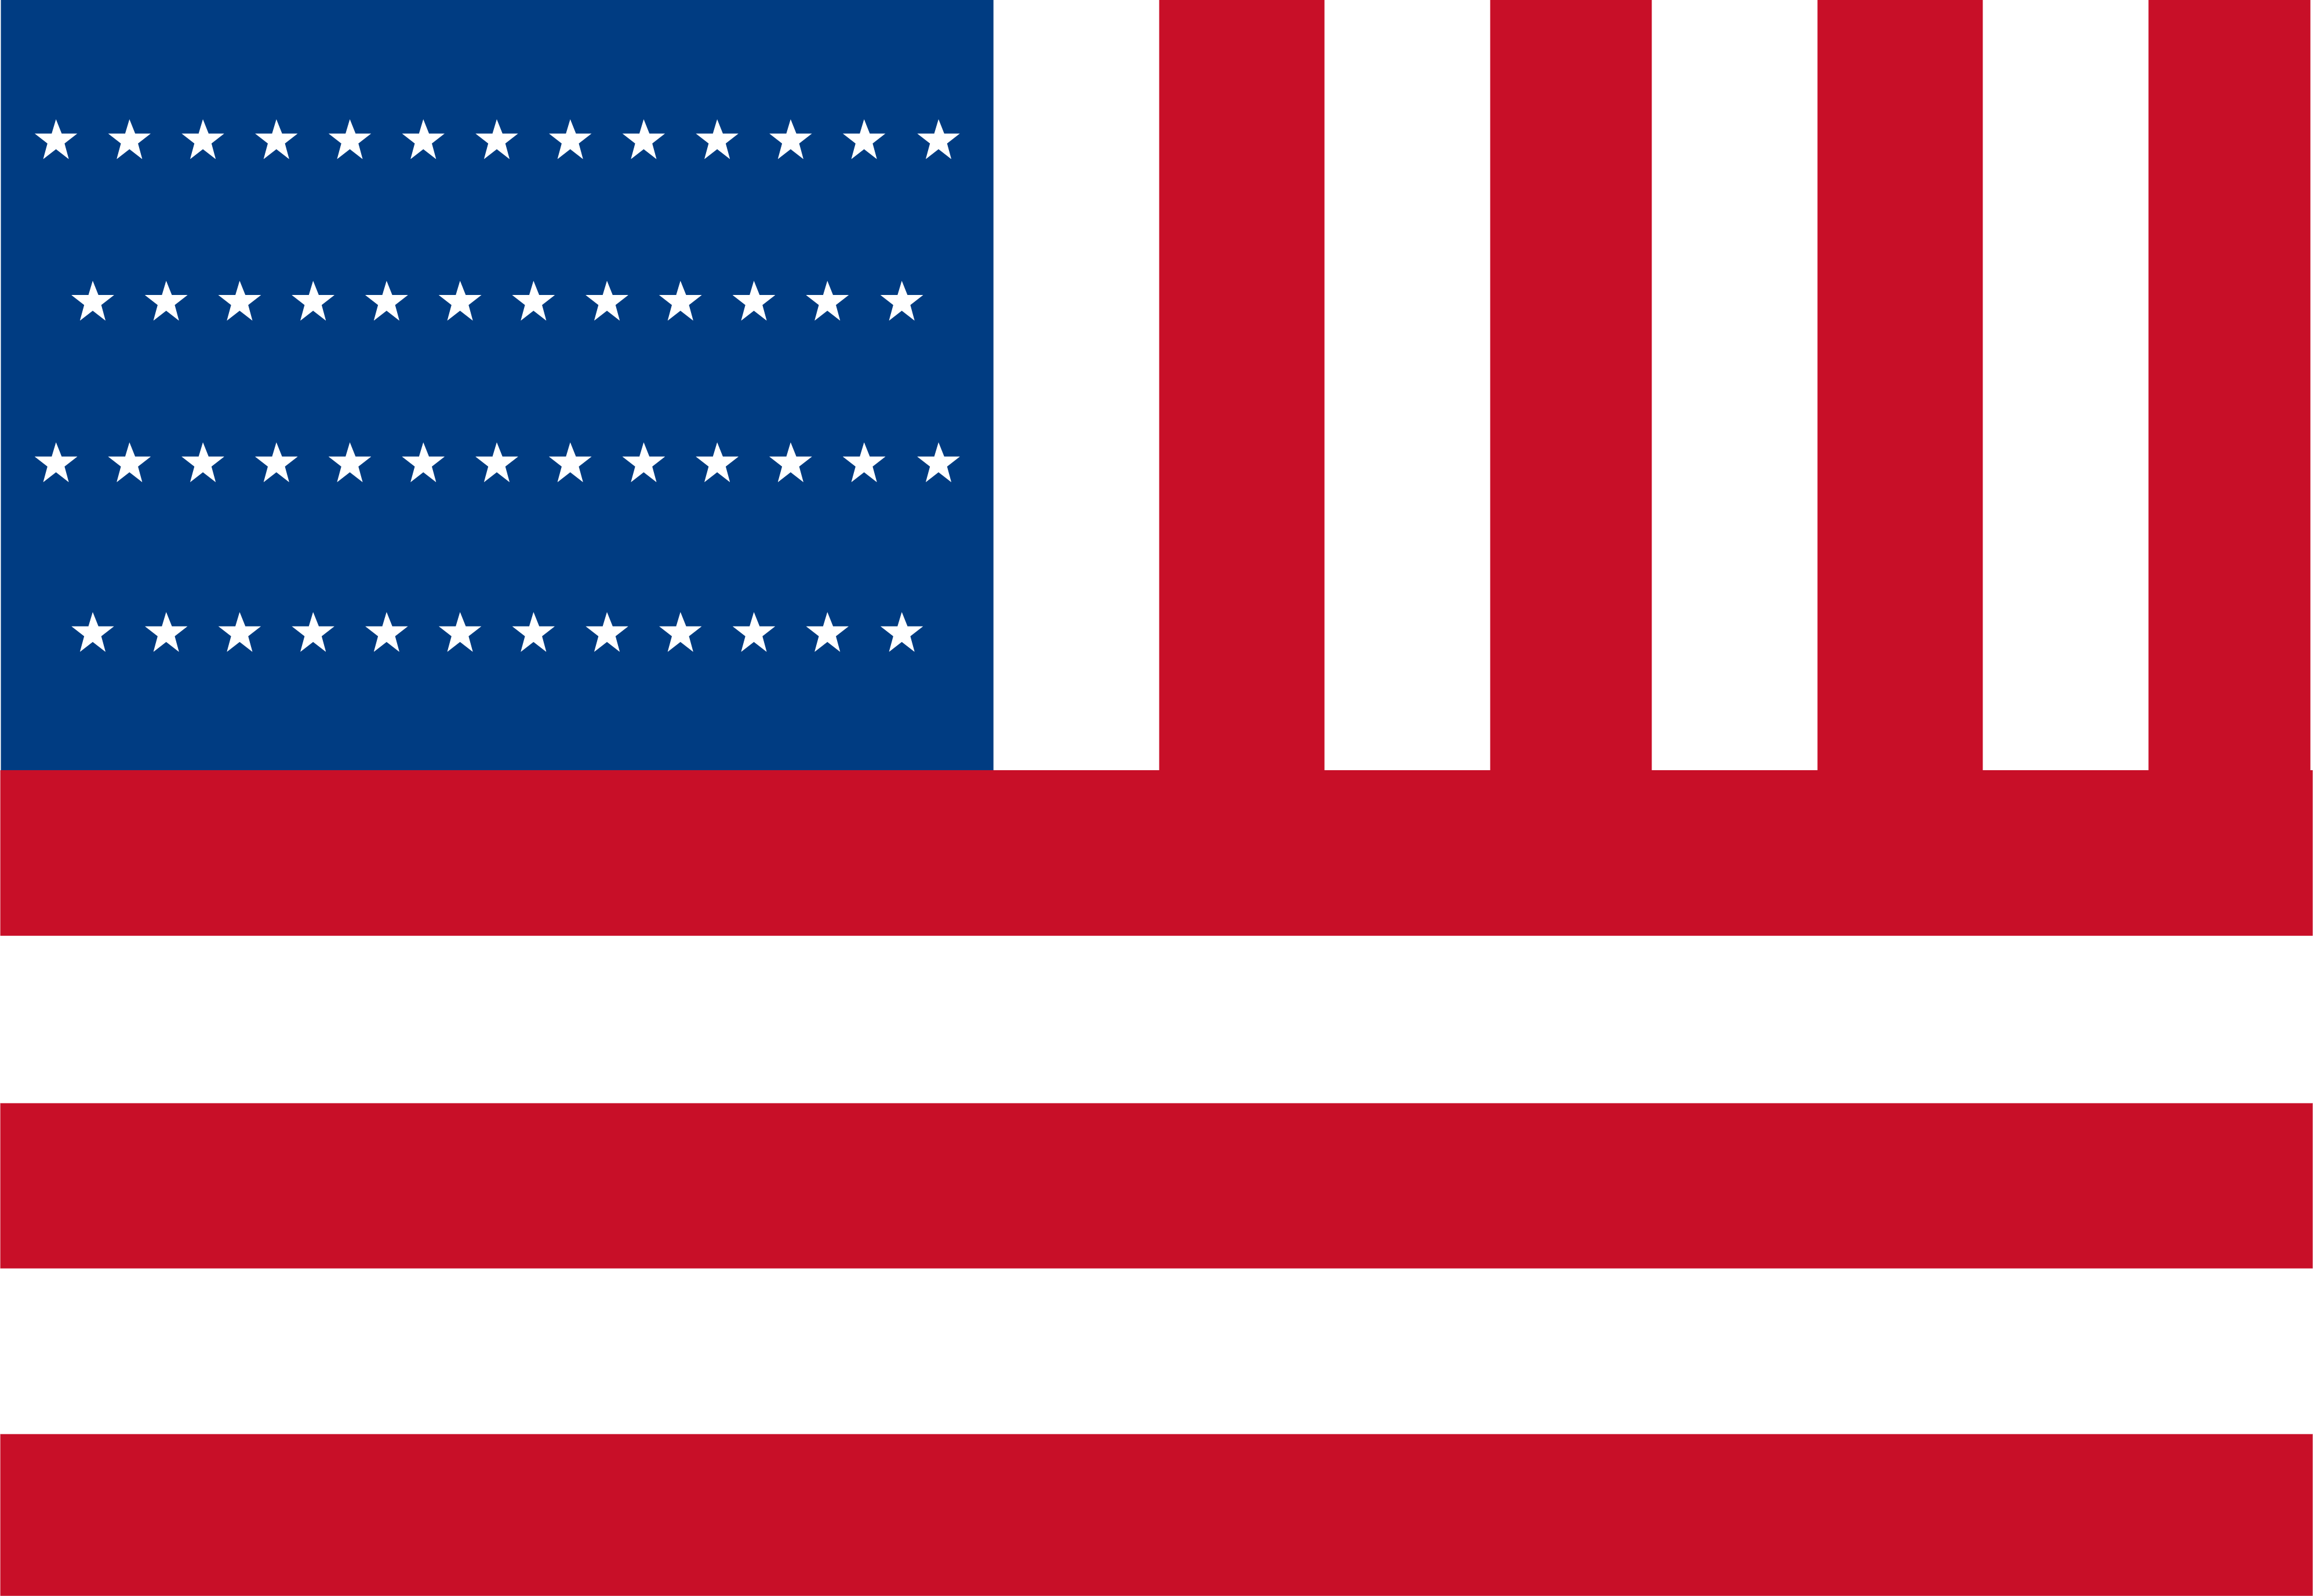 Bank of America Flag Logo - The American Flag per the Bank of America logo. : vexillology